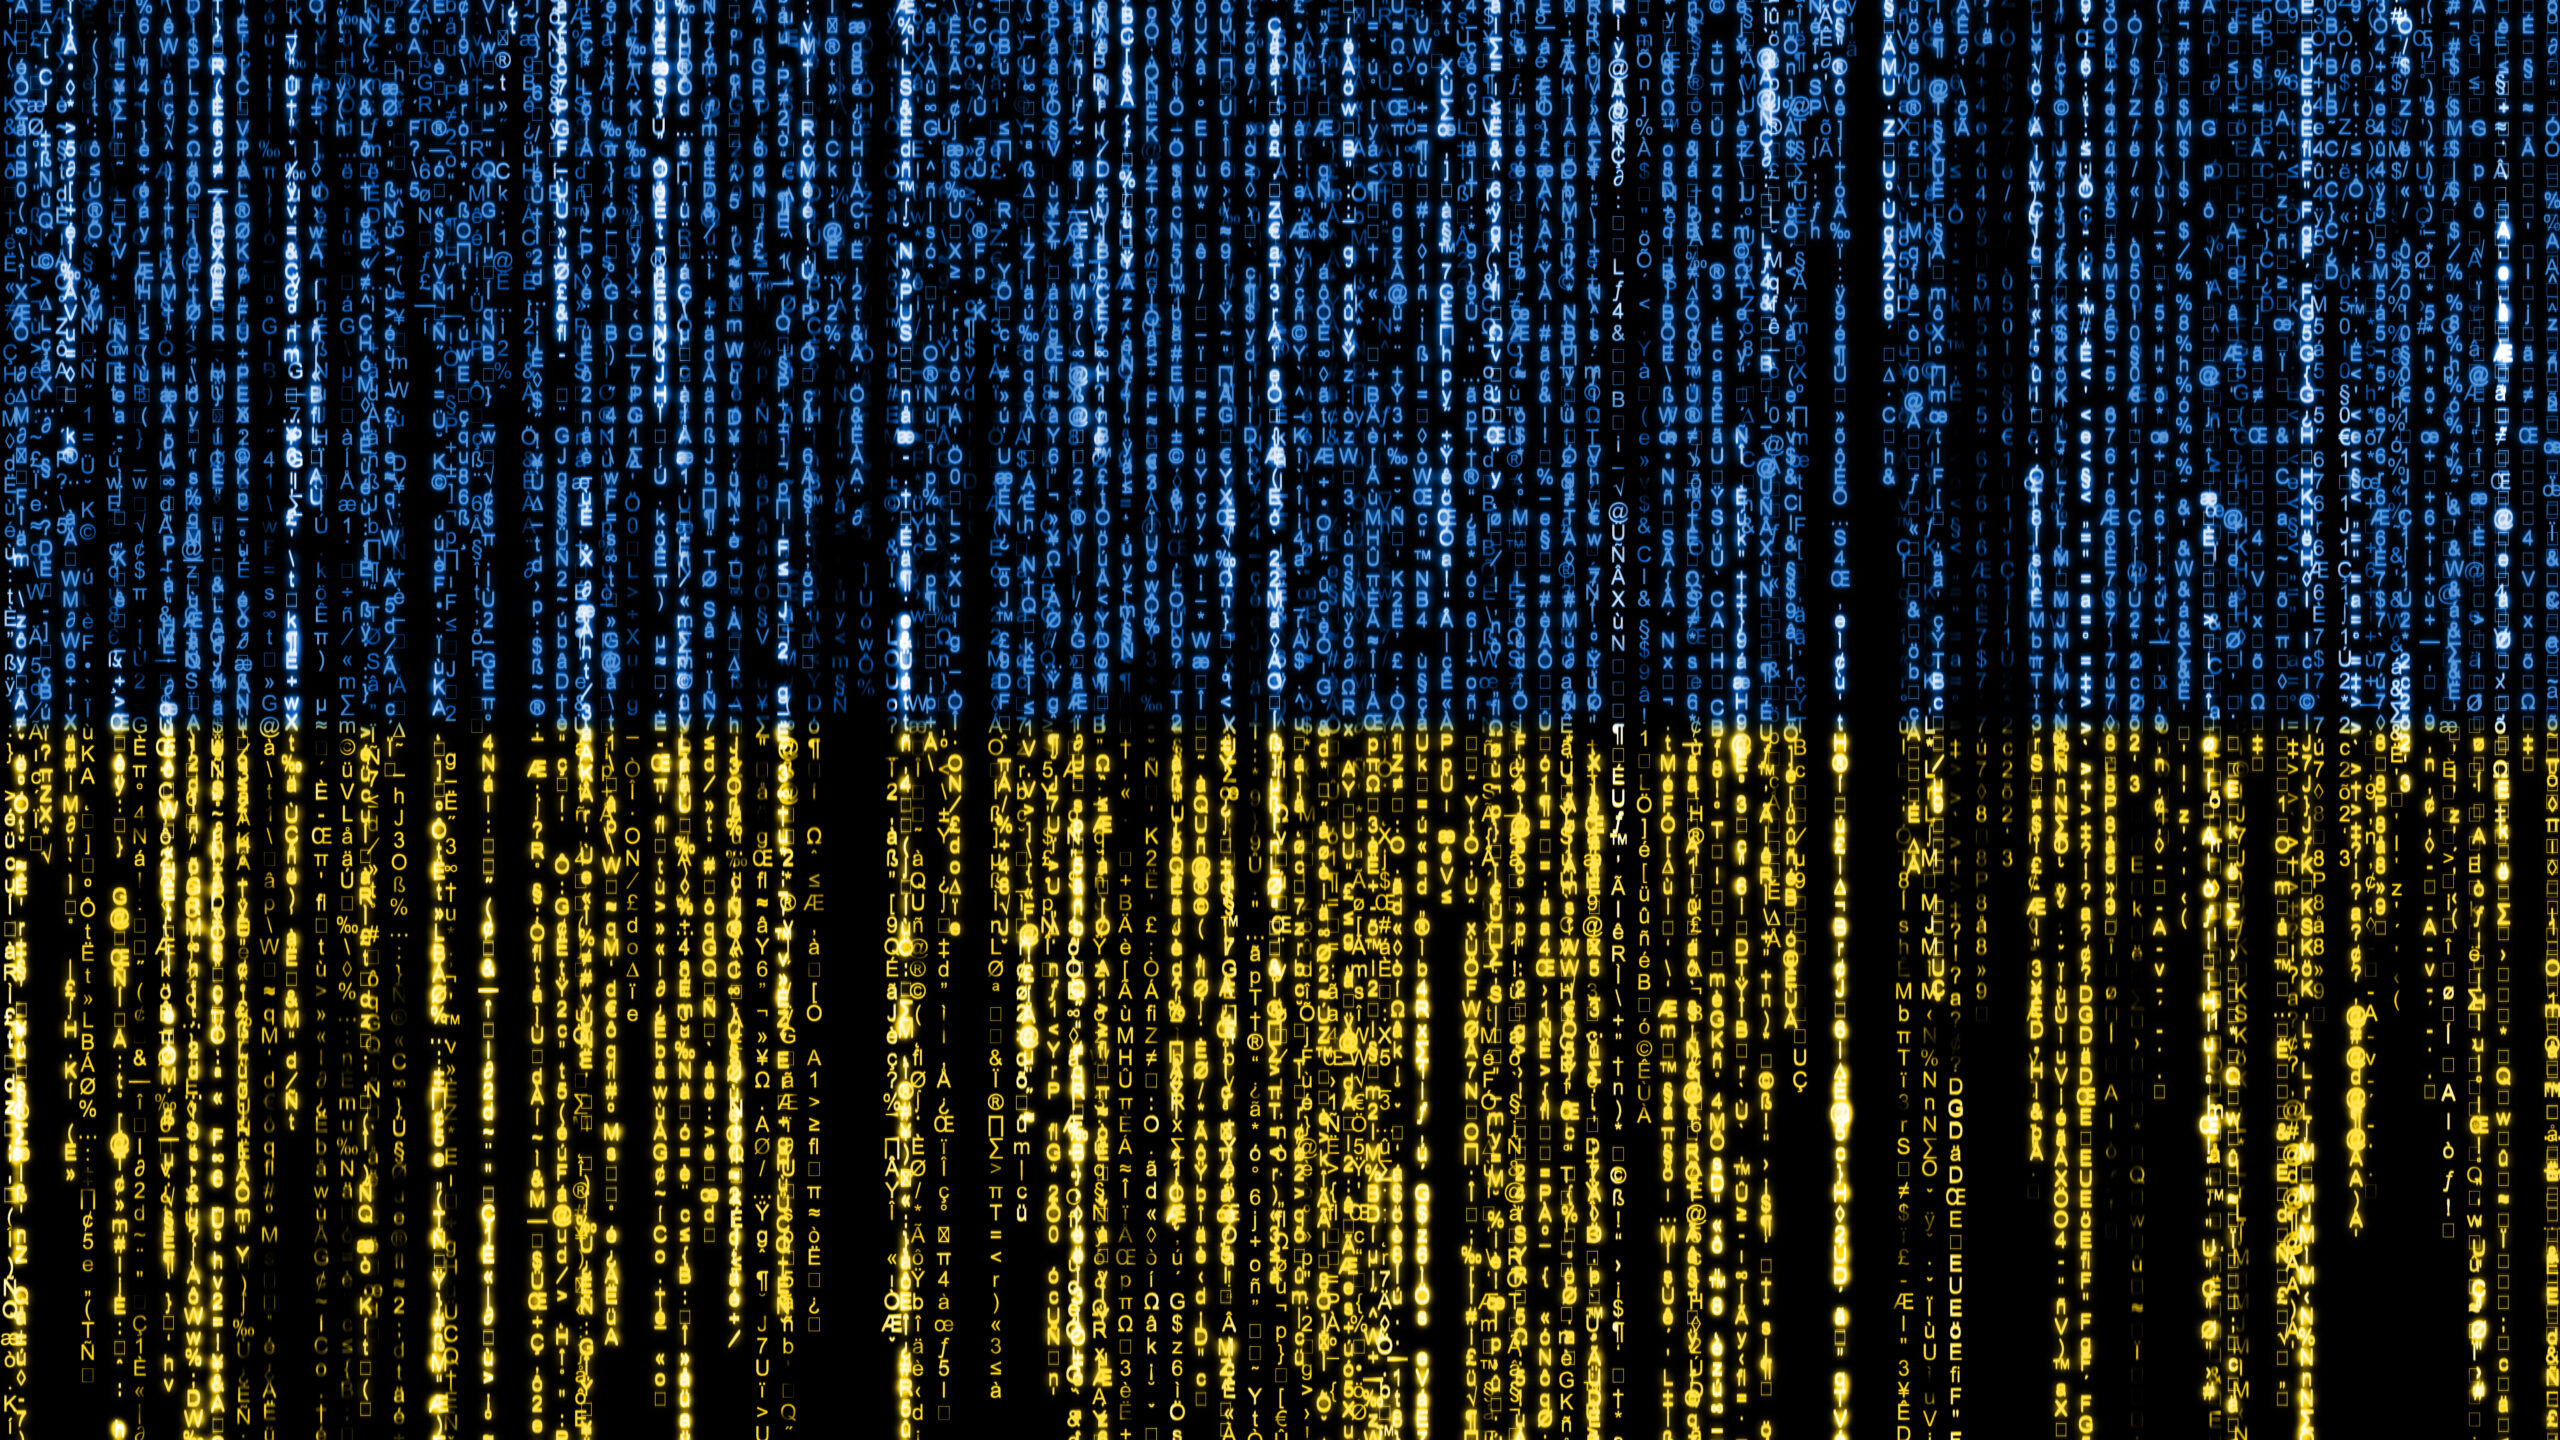 Russian phishing attacks flooded Ukraine, tripled against NATO nations in 2022: Report